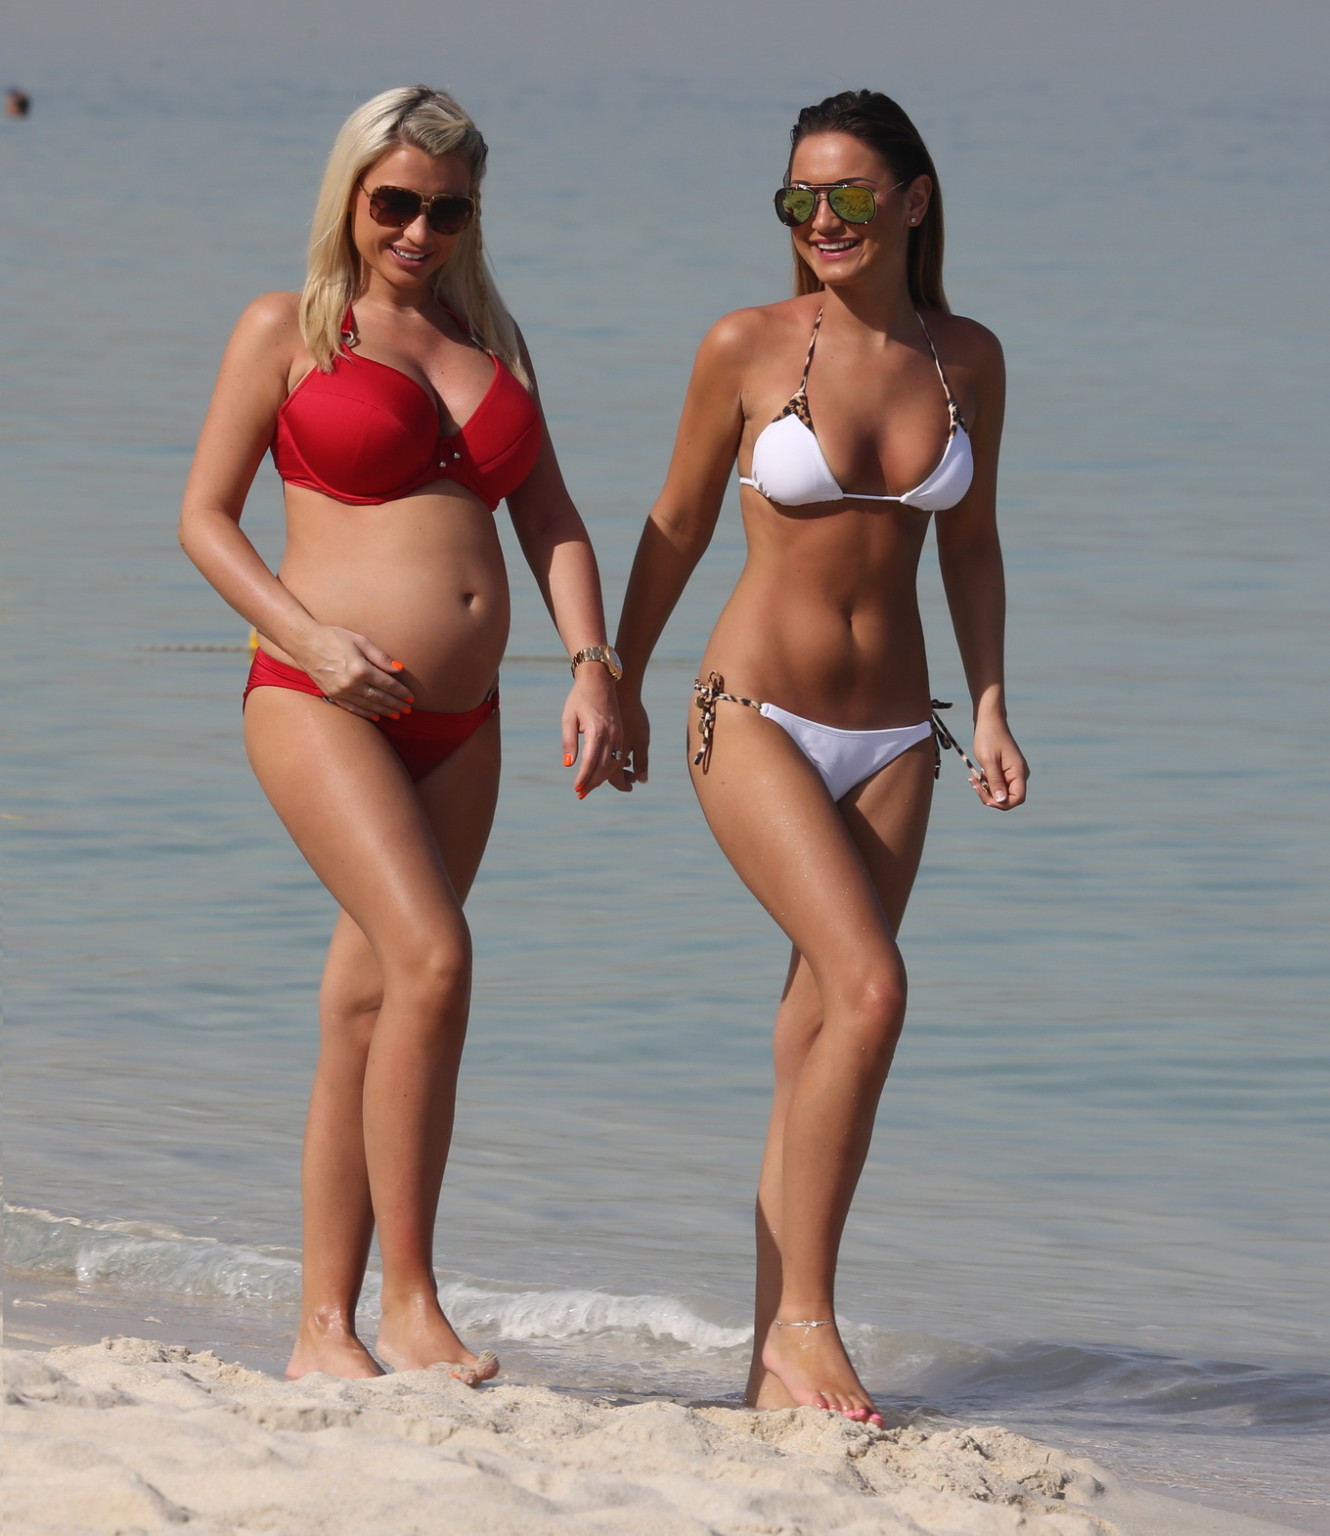 Sam e billie Faiers indossano bikini striminziti in spiaggia durante una vacanza in uae
 #75197541